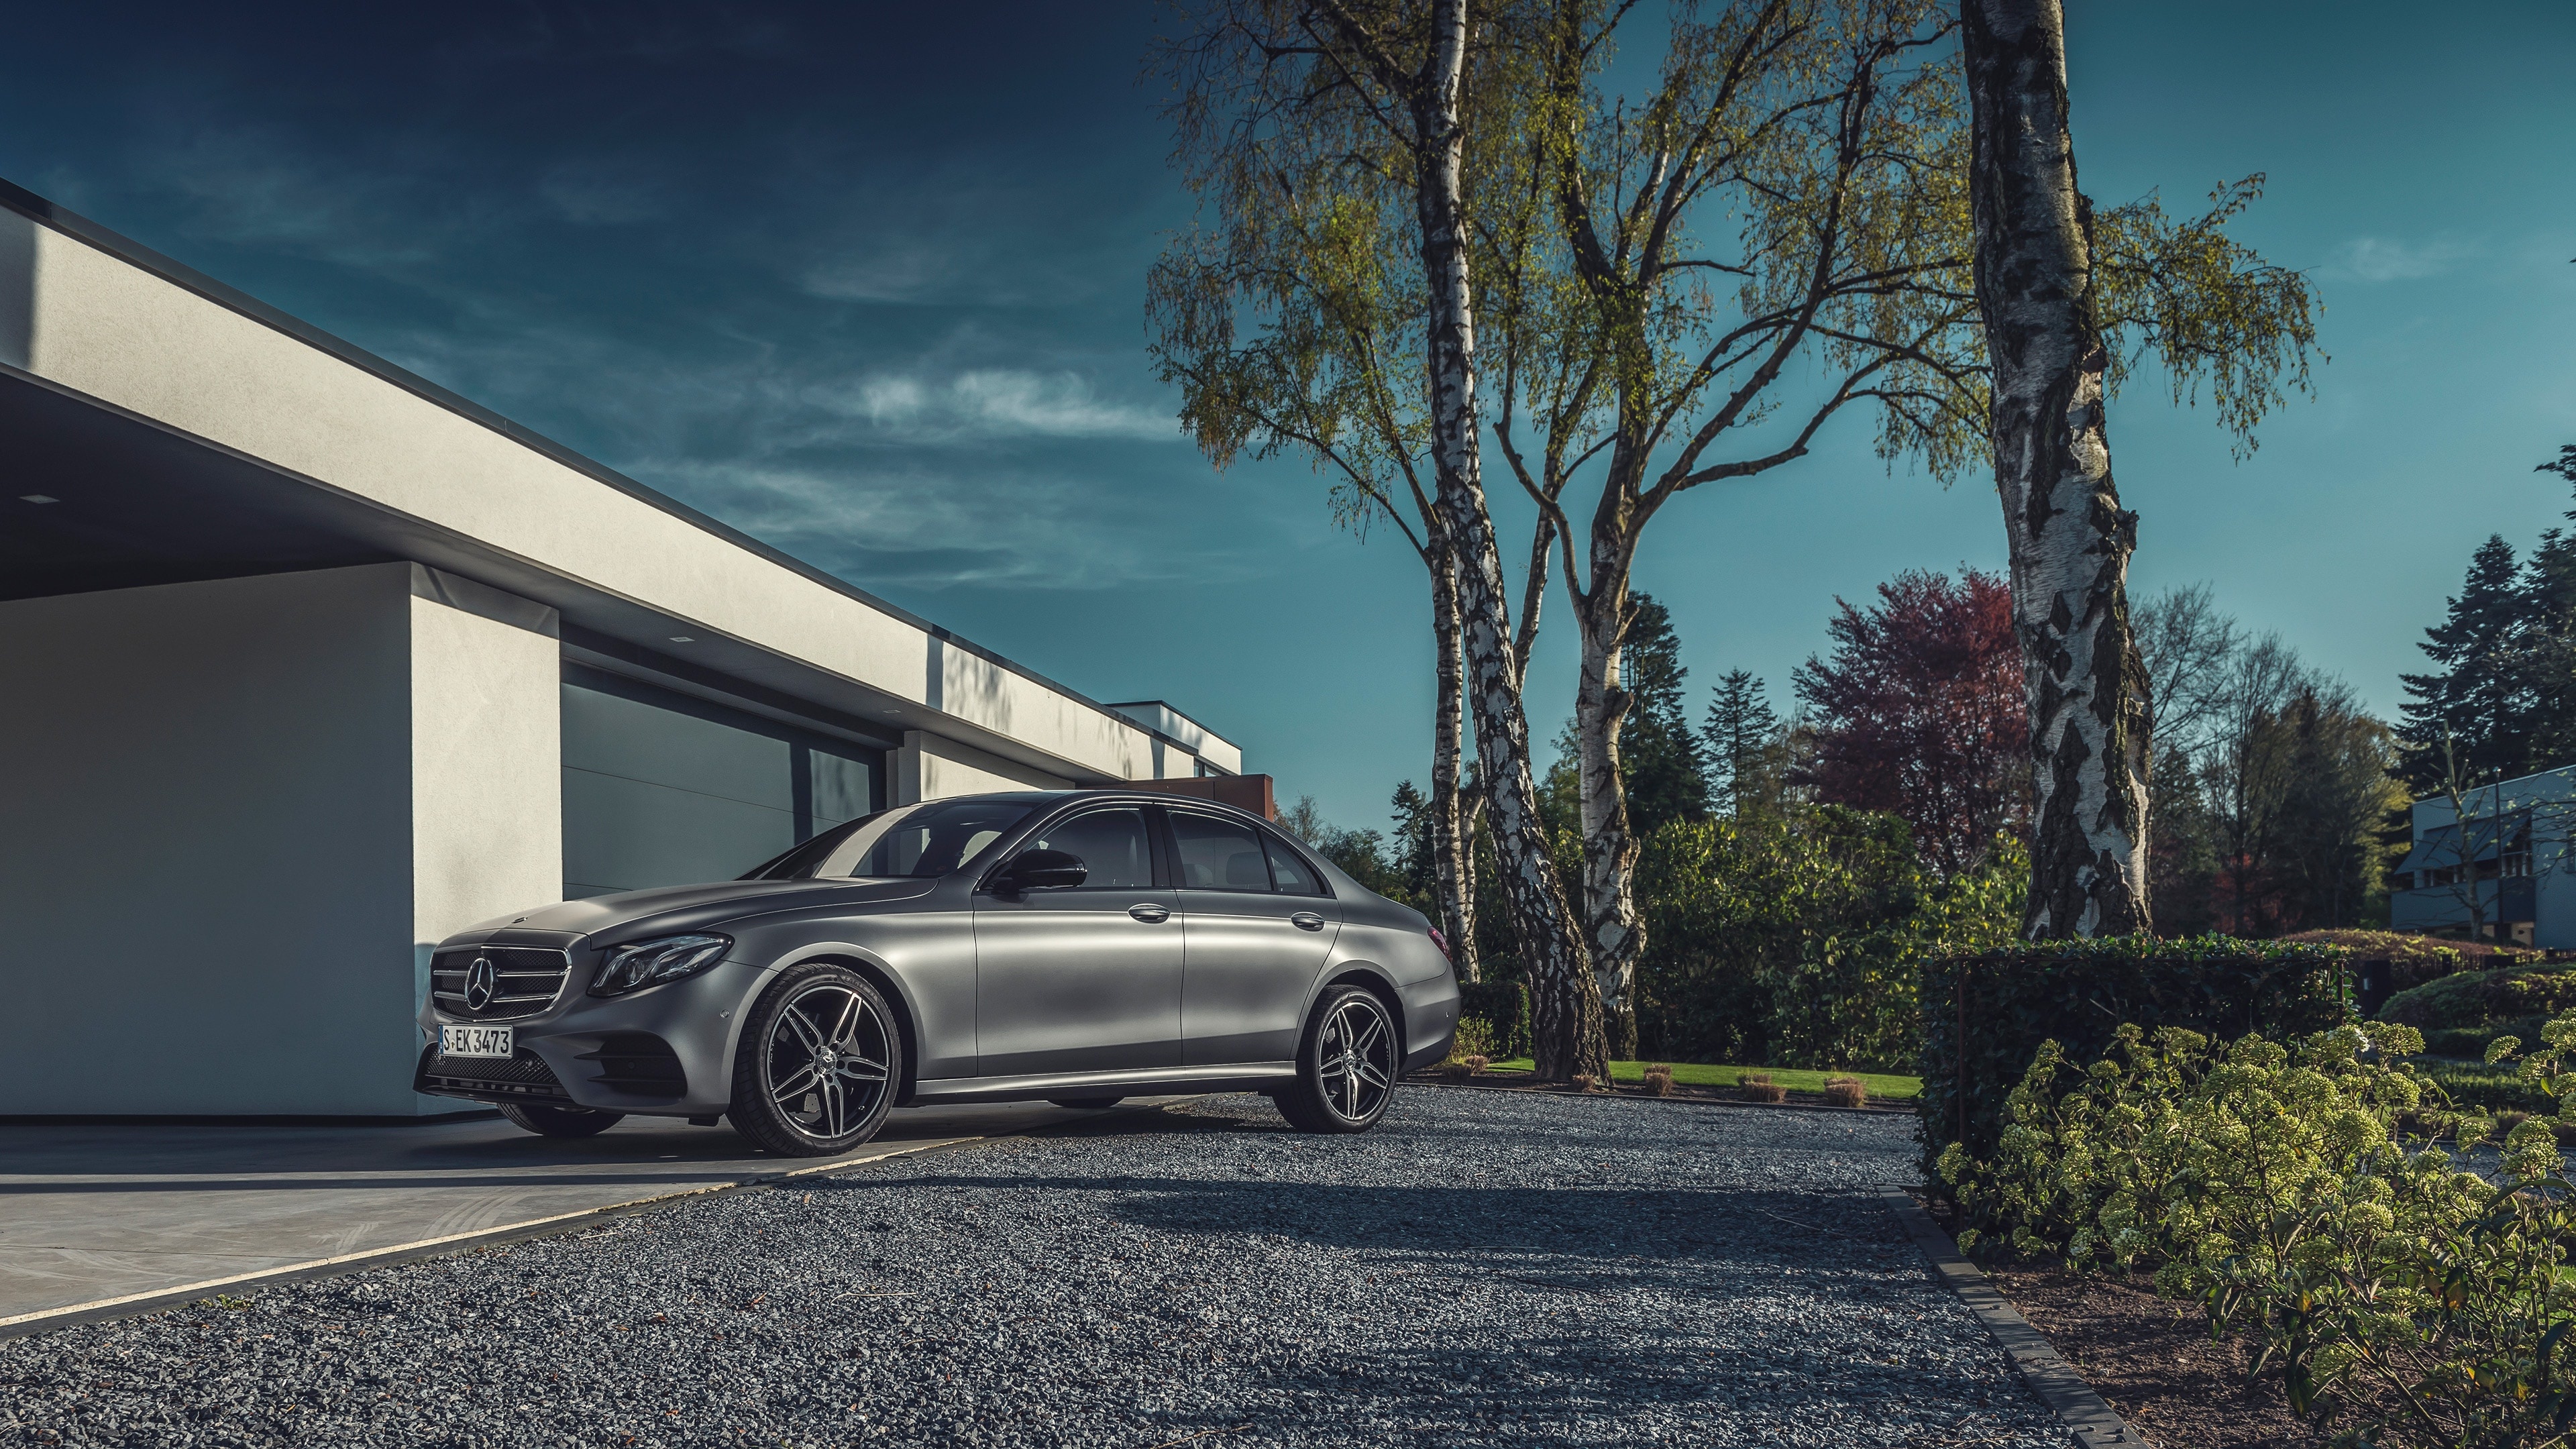 Mercedes-Benz E-Class, Benz wallpapers, Luxury vehicle, High-quality images, 3840x2160 4K Desktop